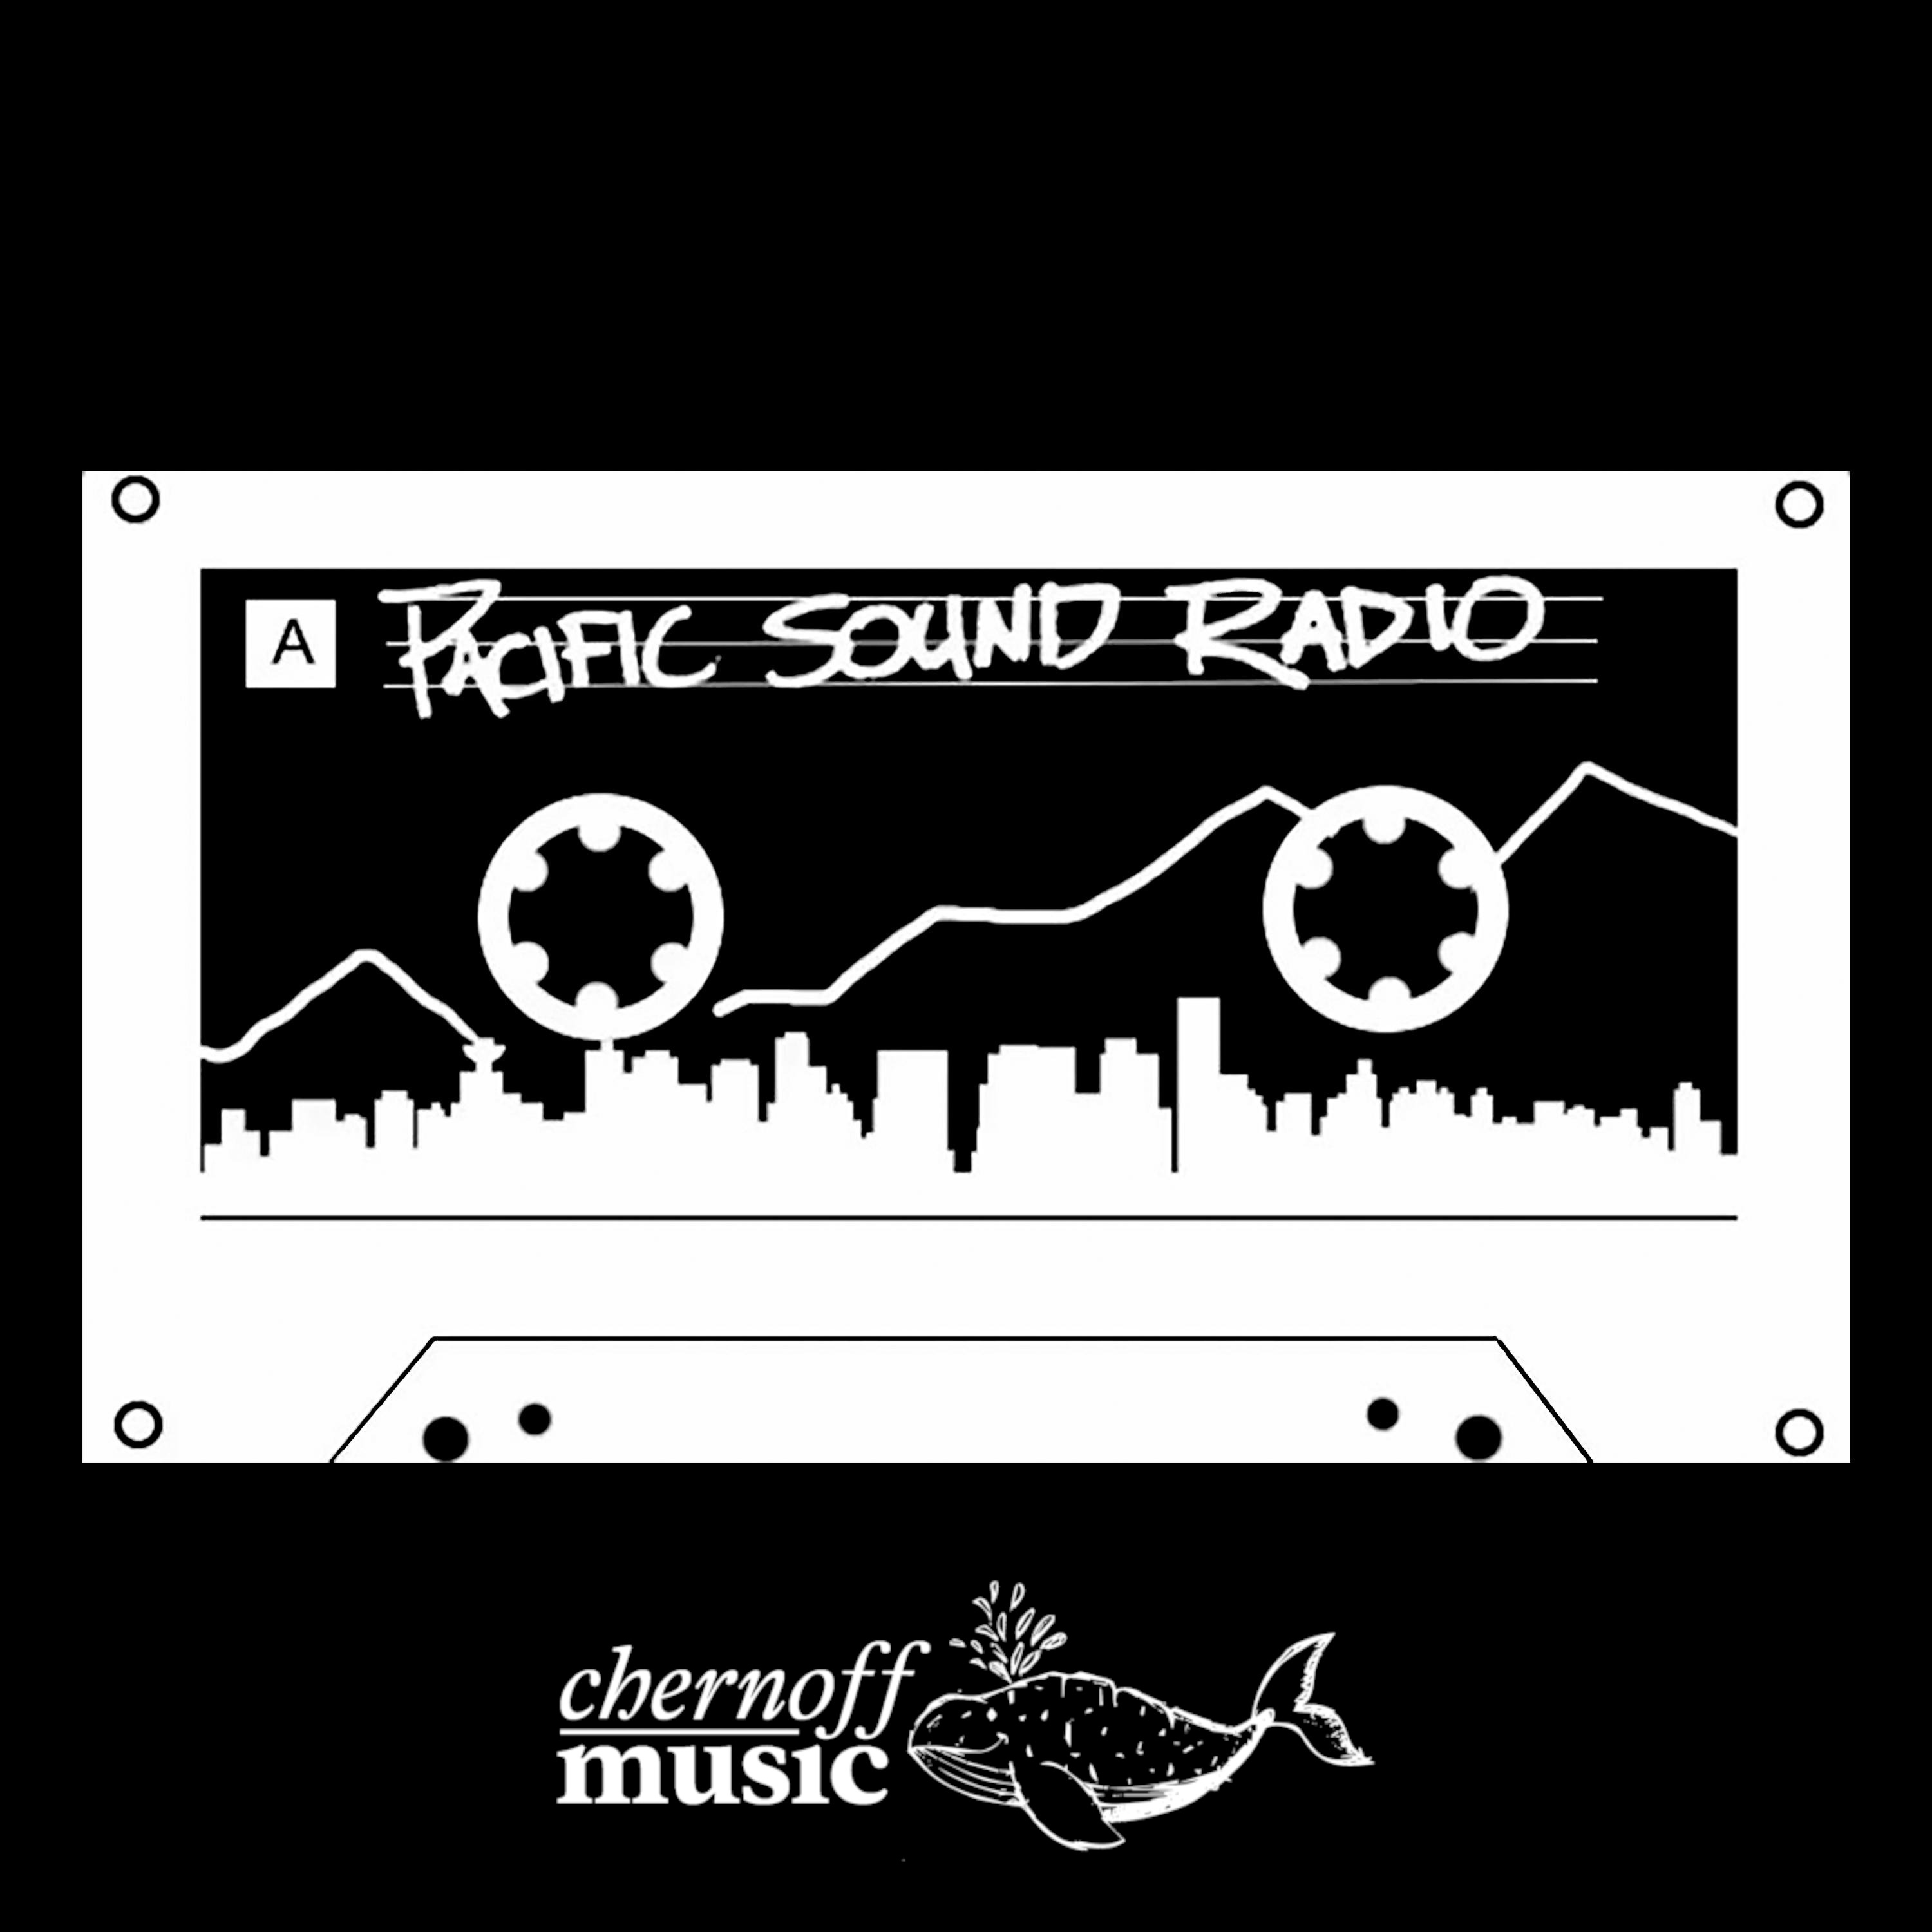 Pacific Sound Radio's artwork